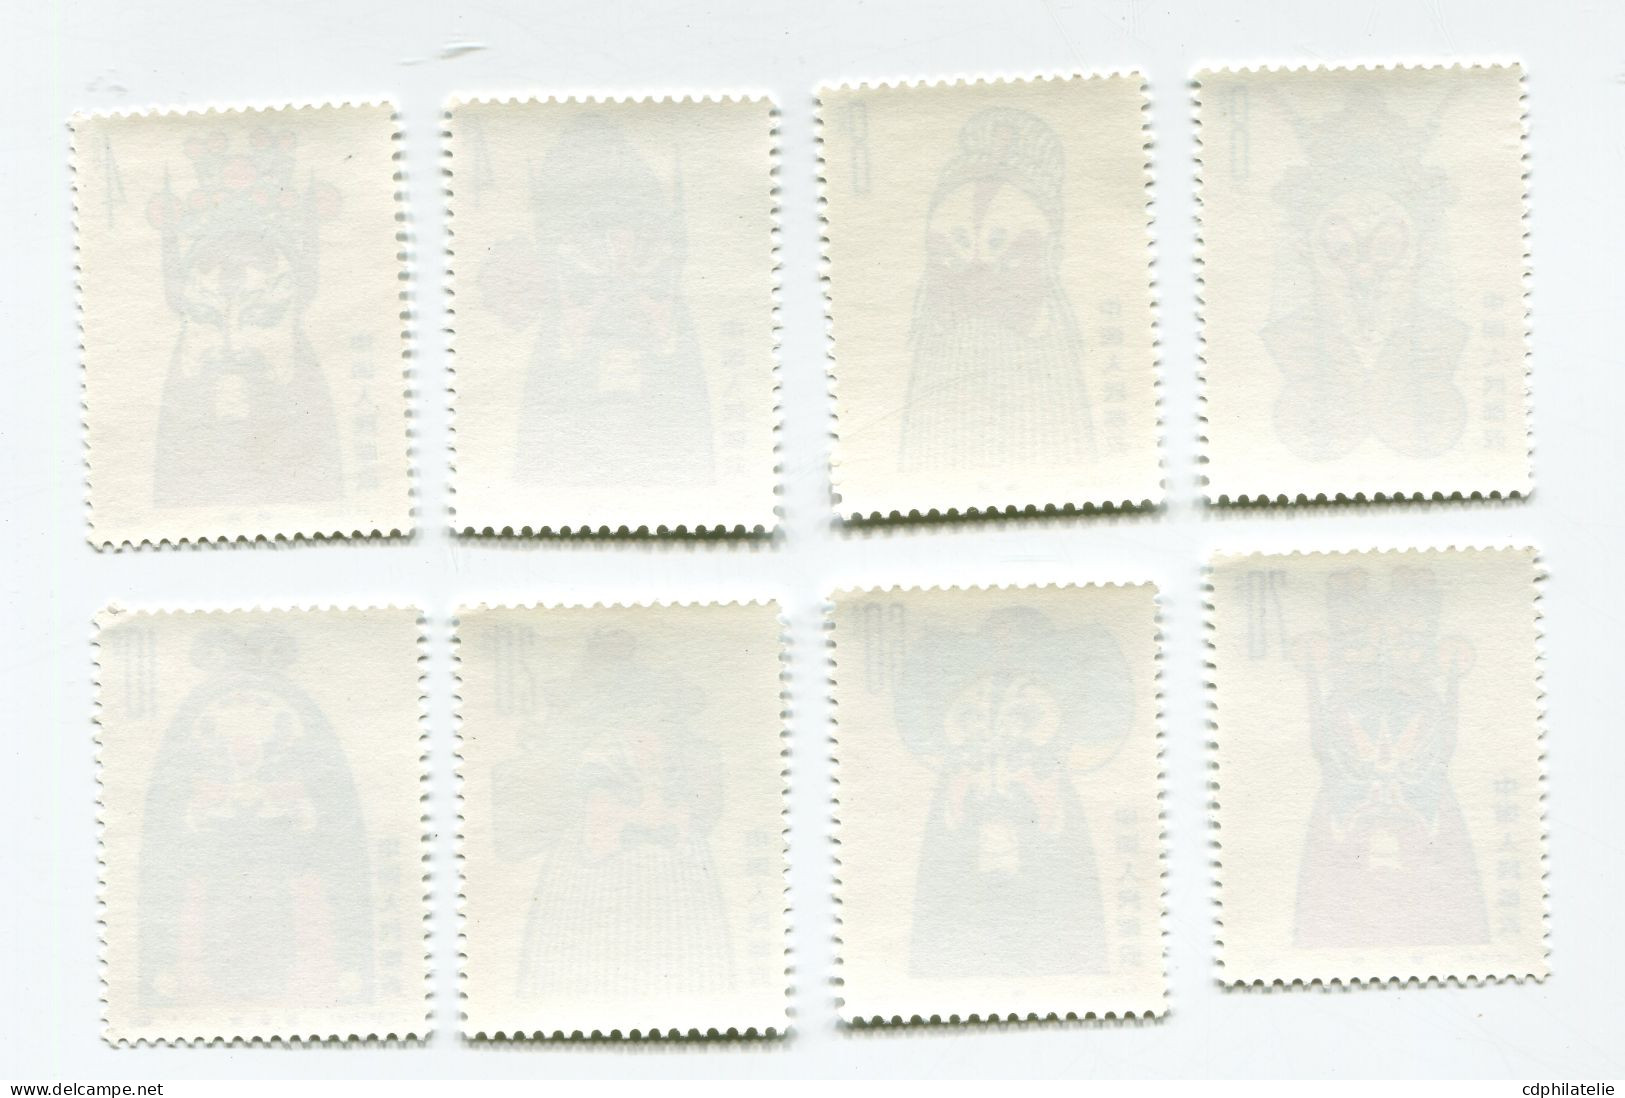 CHINE N°2304 / 2311 ** MASQUES D'OPERAS " BEIJING " - Unused Stamps